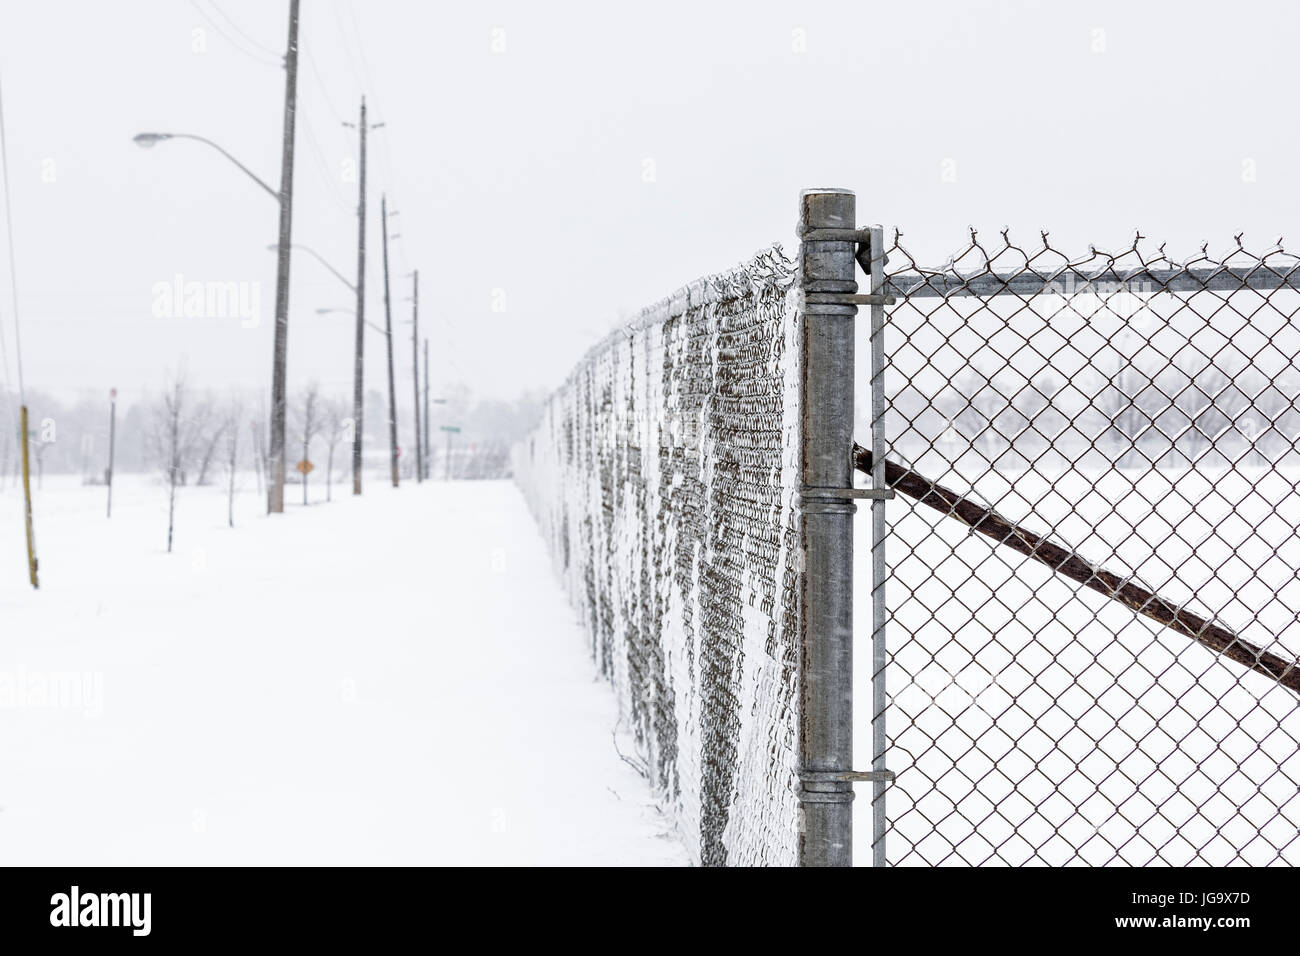 Chaîne lien grillage recouvert de neige, Thunder Bay, Ontario, Canada. Banque D'Images